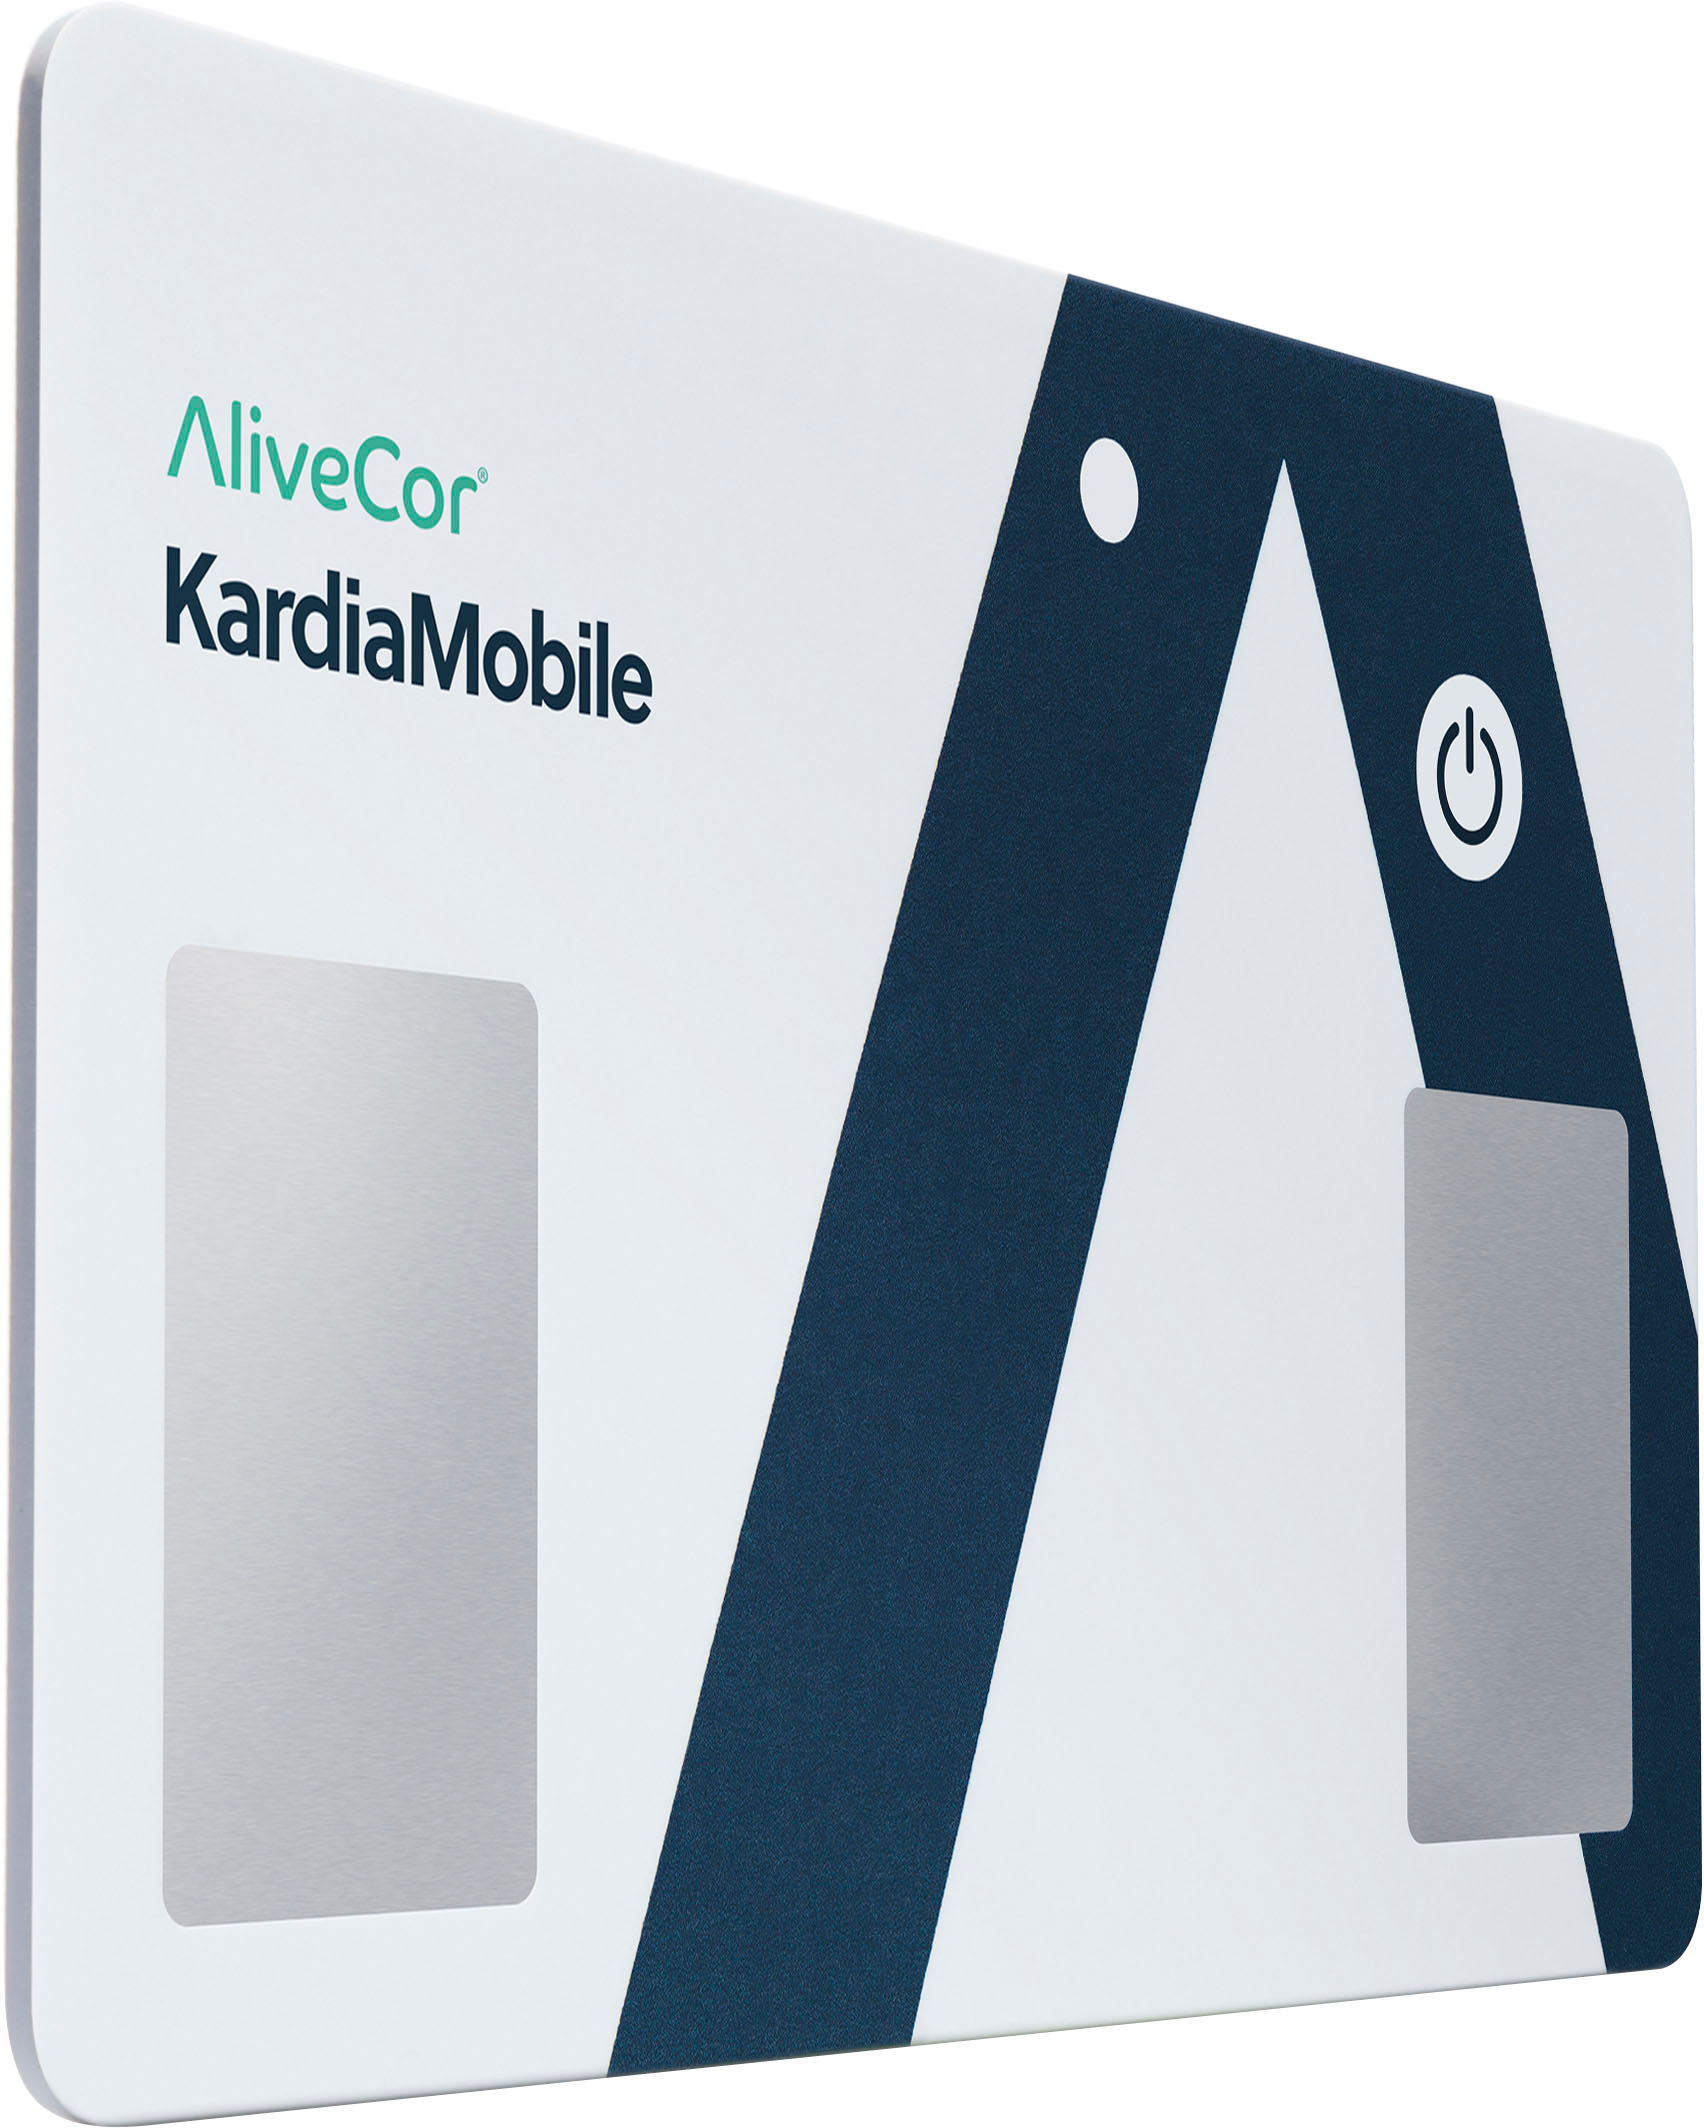 Angle View: AliveCor - KardiaMobile Card Personal EKG - white